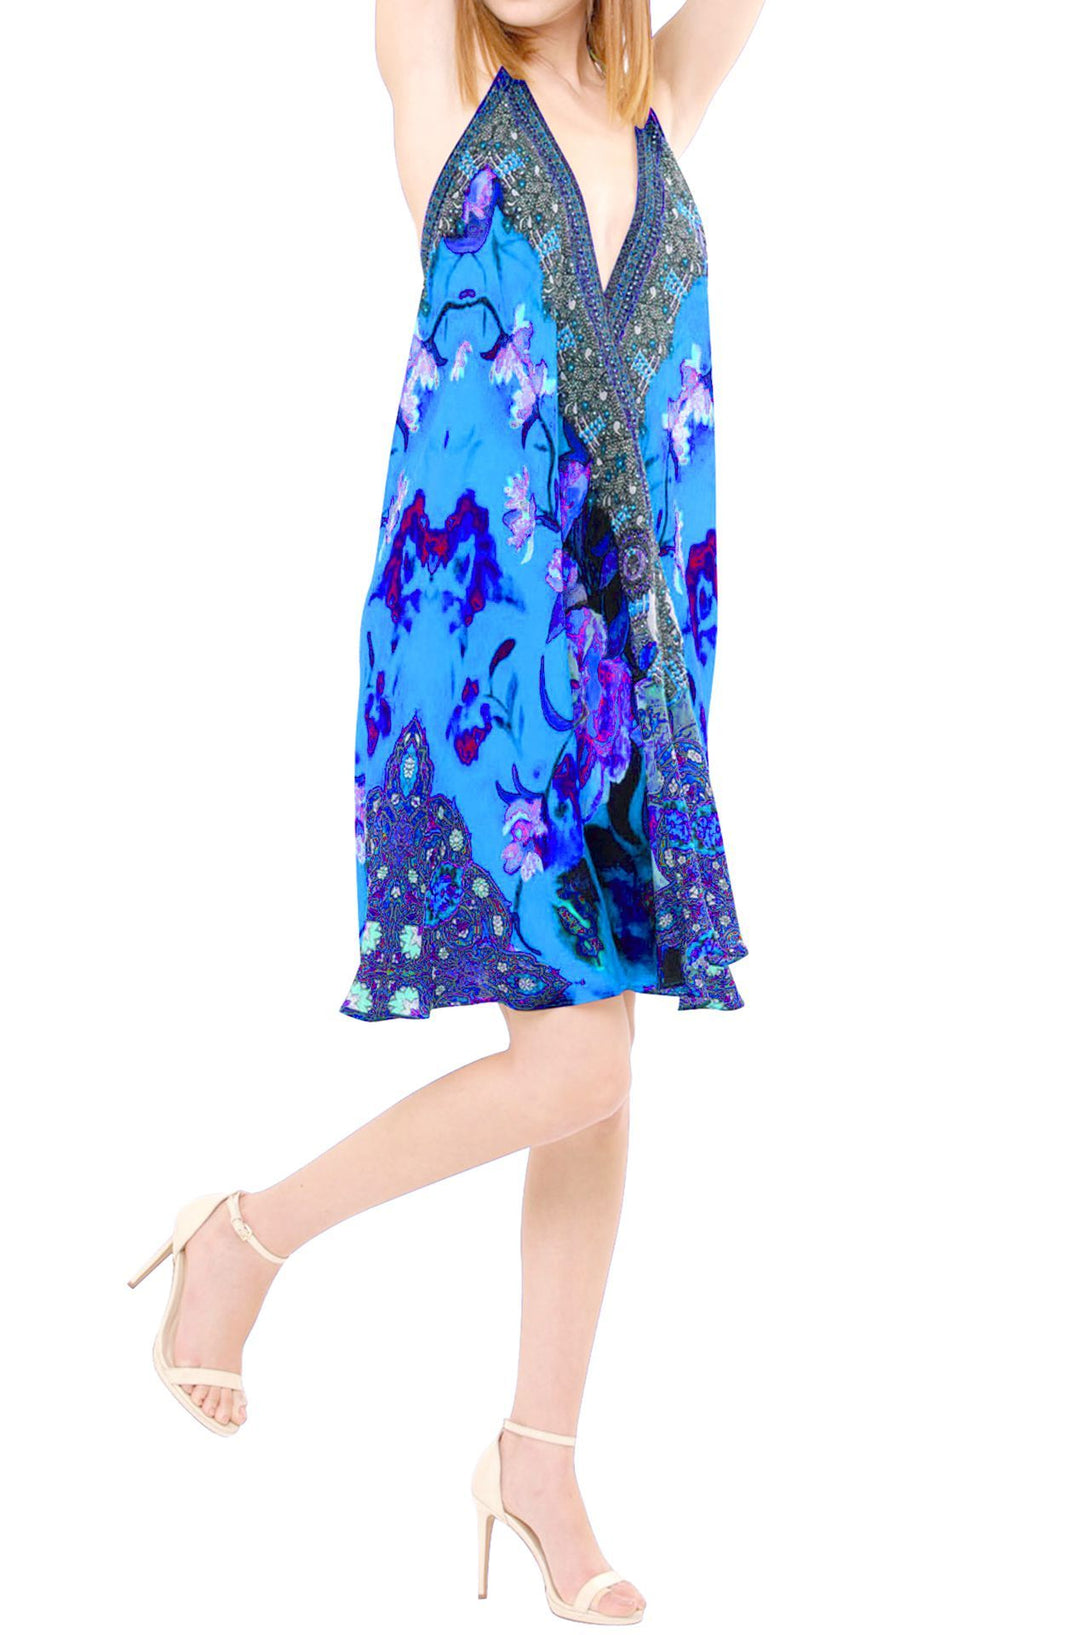  dark blue mini dress, Shahida Parides, sexy mini dresses for women, sleeveless mini dress,